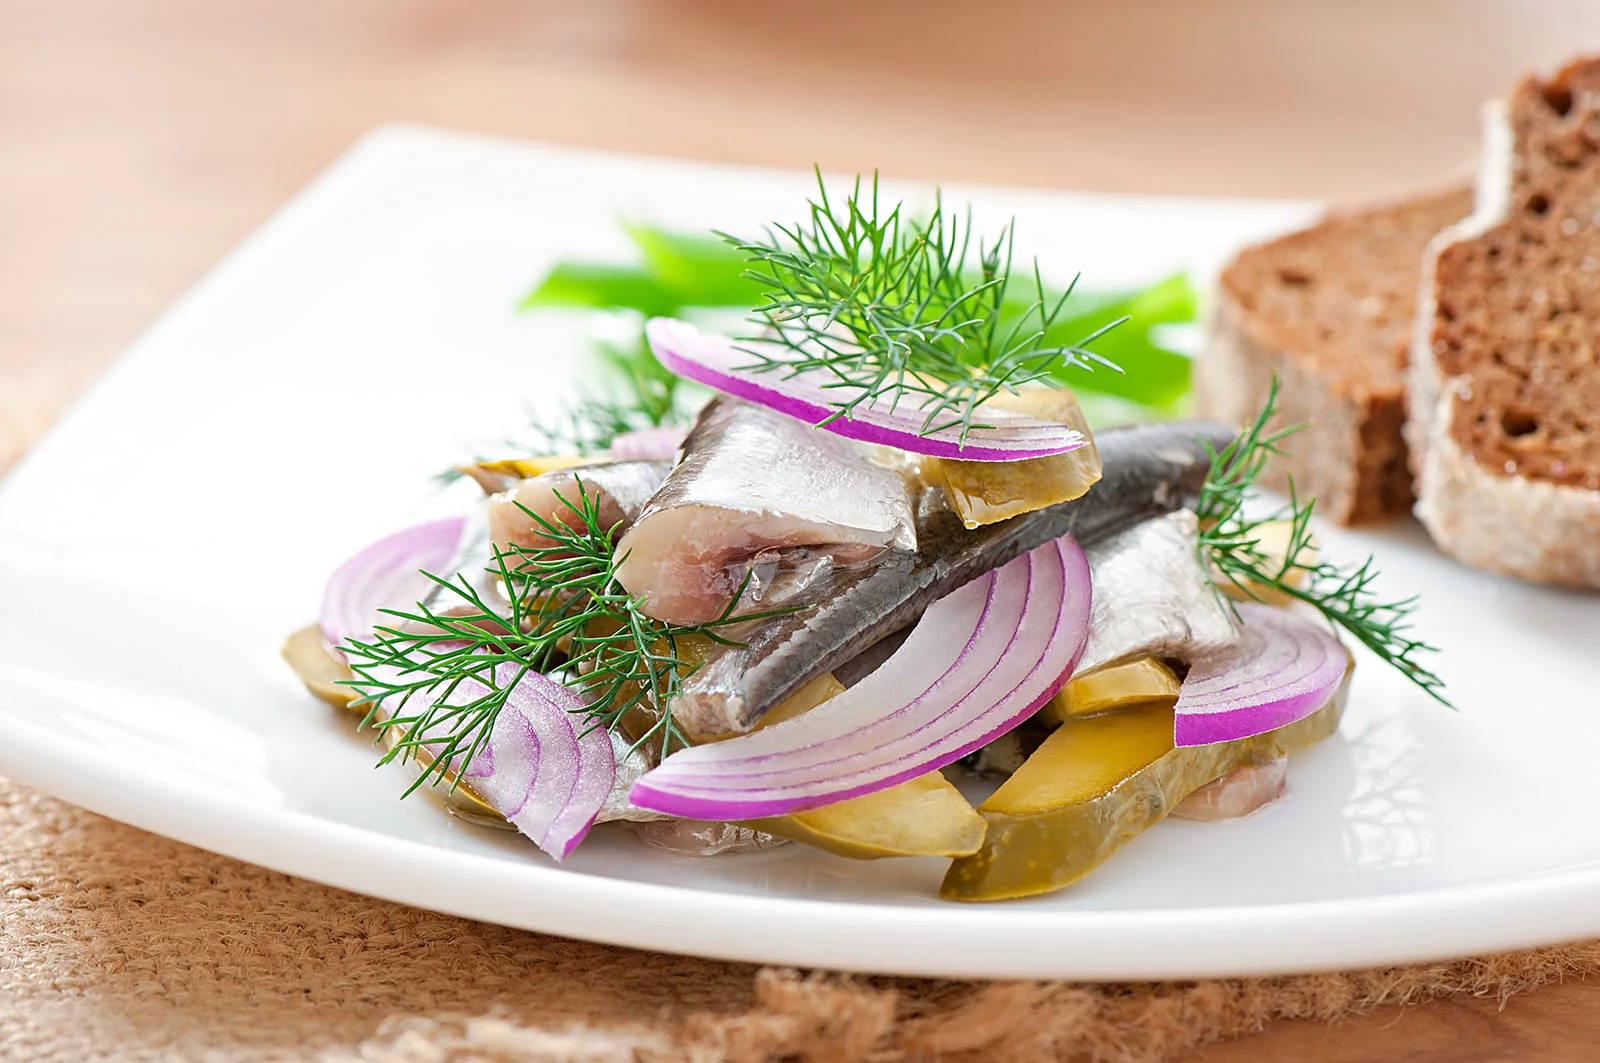 Herring salad part of the Nordic diet